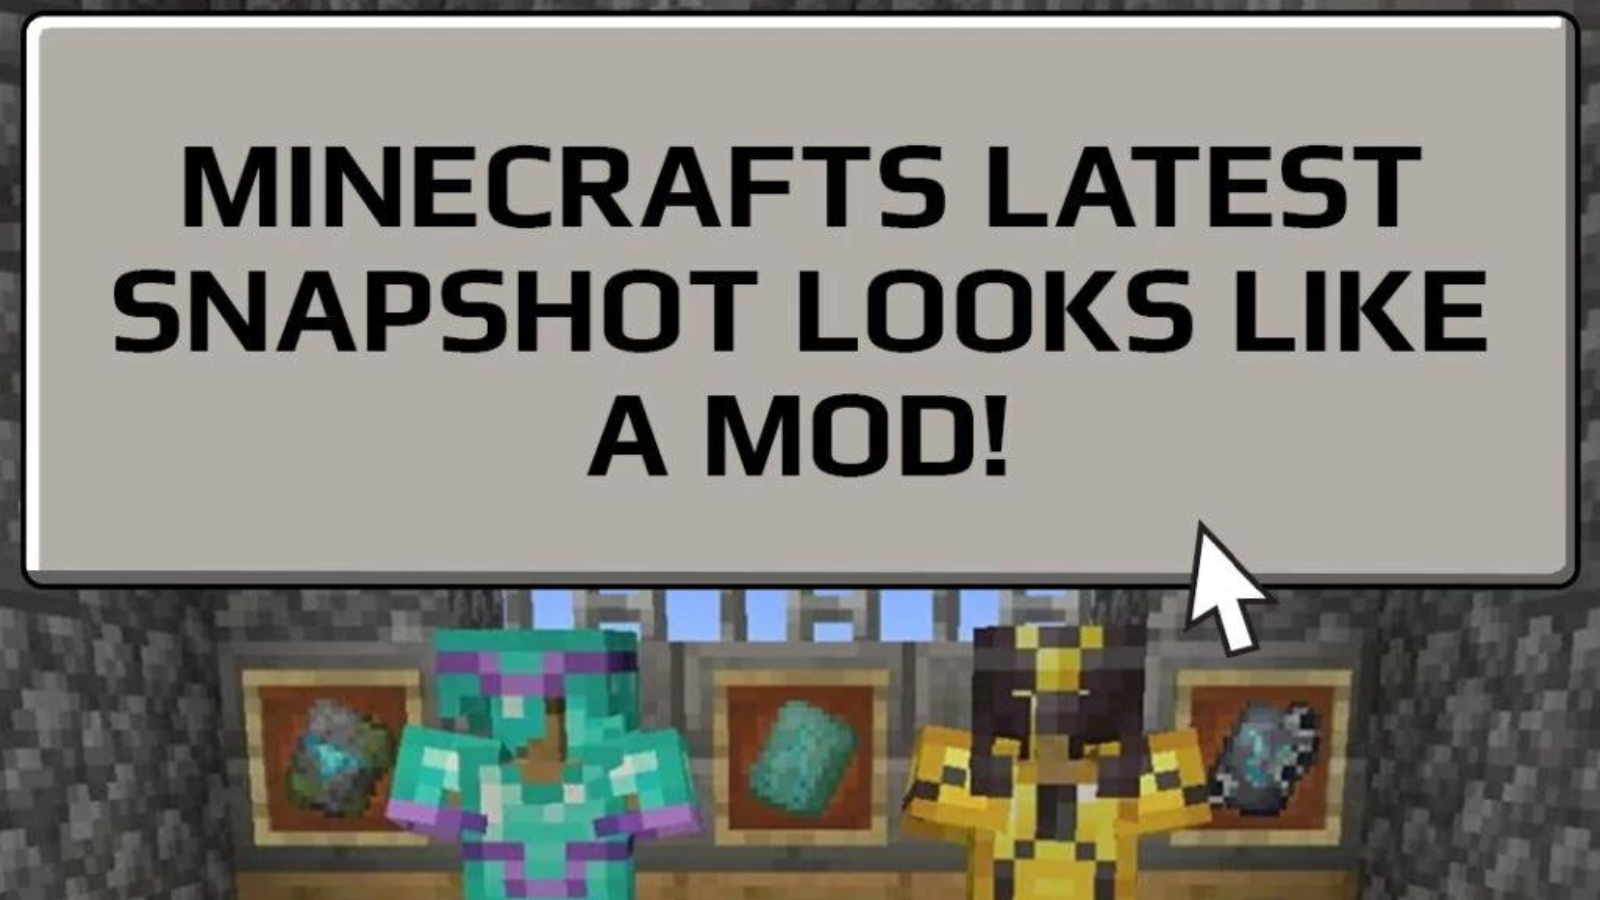 Crafty — Unleash Creativity with Minecraft's New Leather Armor Trims